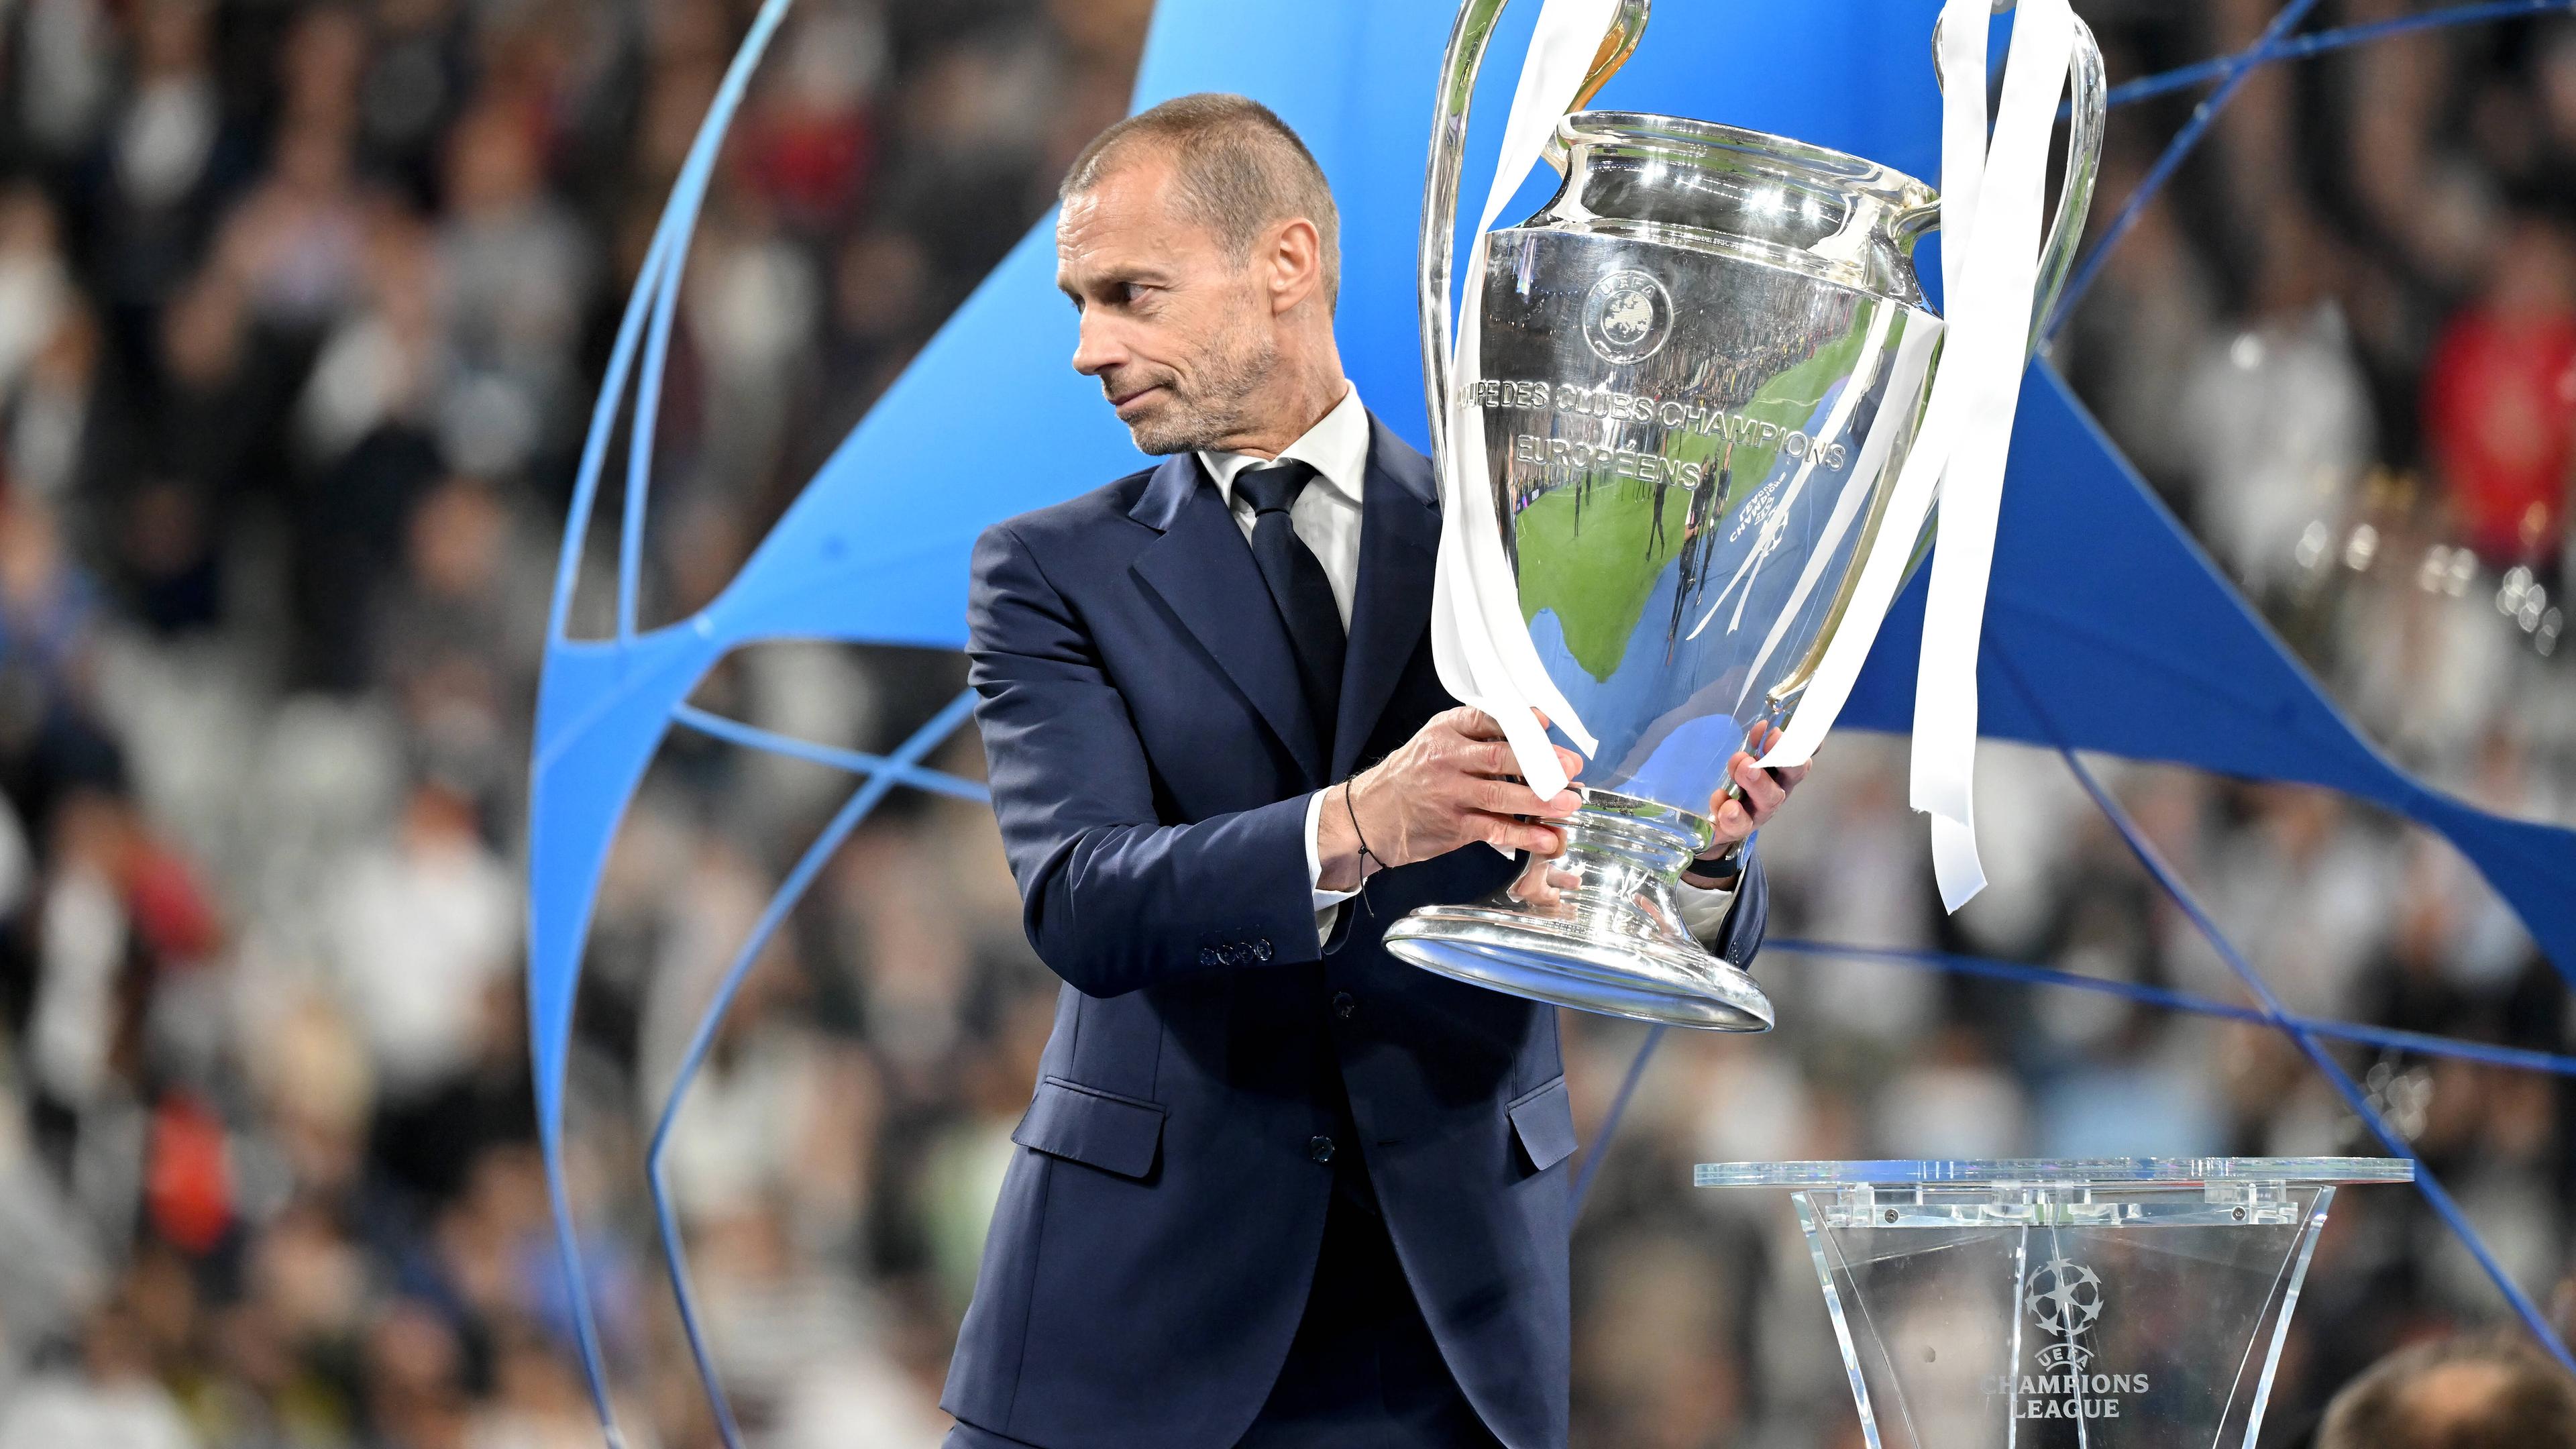 UEFA-Präsident Aleksander Ceferin mit Pokal